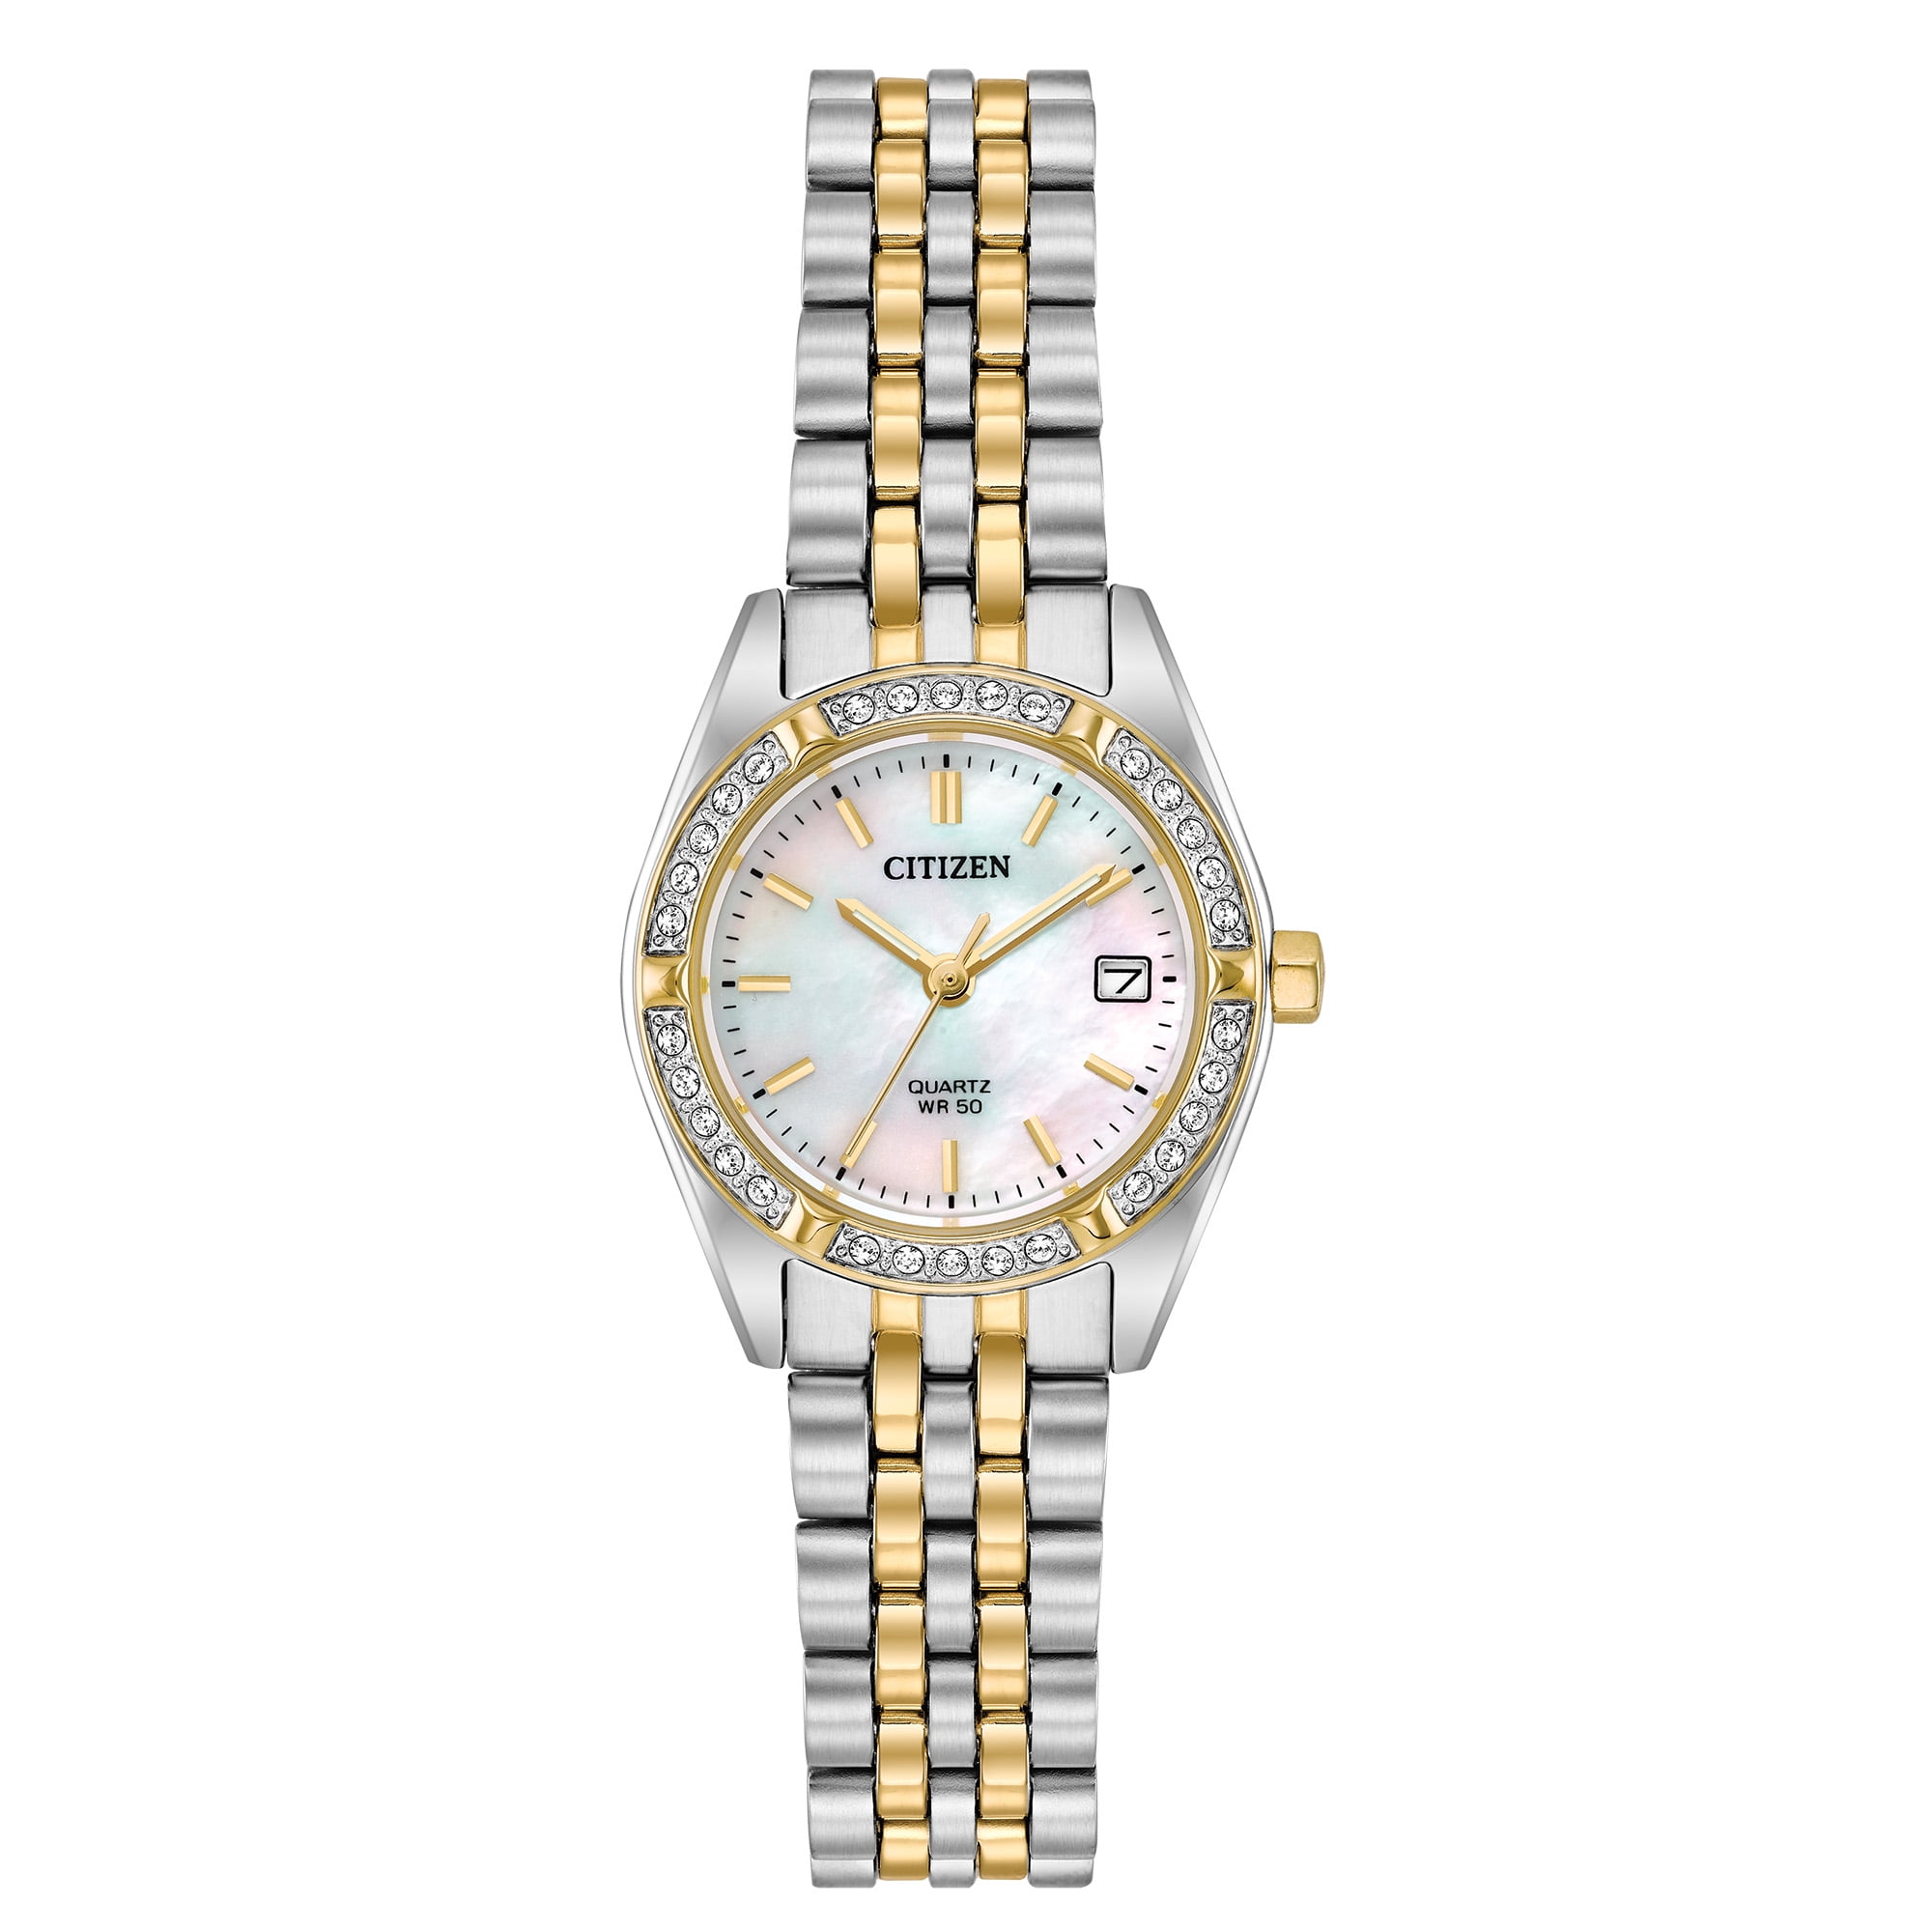 Citizen Women's Quartz Two-Tone Crystal Watch EU6064-54D 